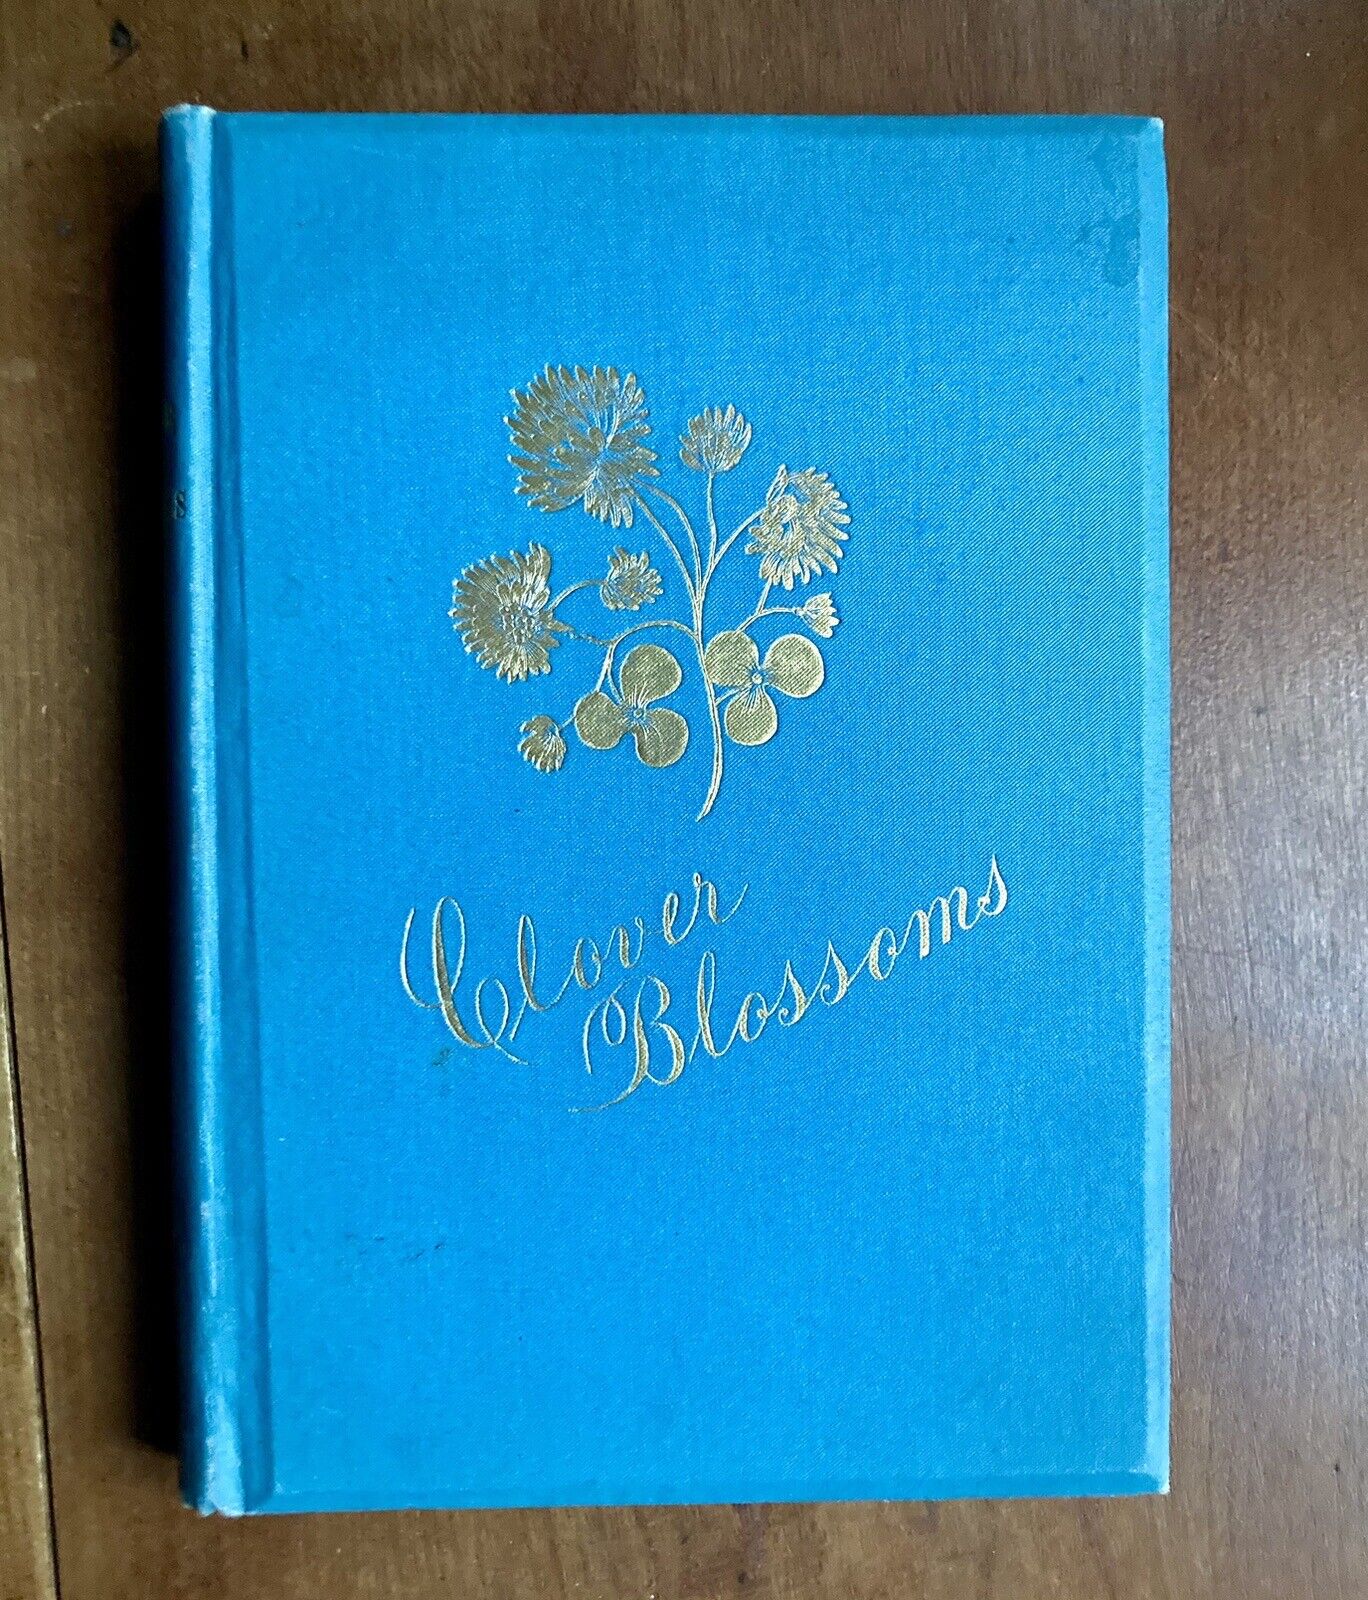 Clover Blossoms:Suffragette Votes for Women: E Hedge Webster: Boston 1894 Signed